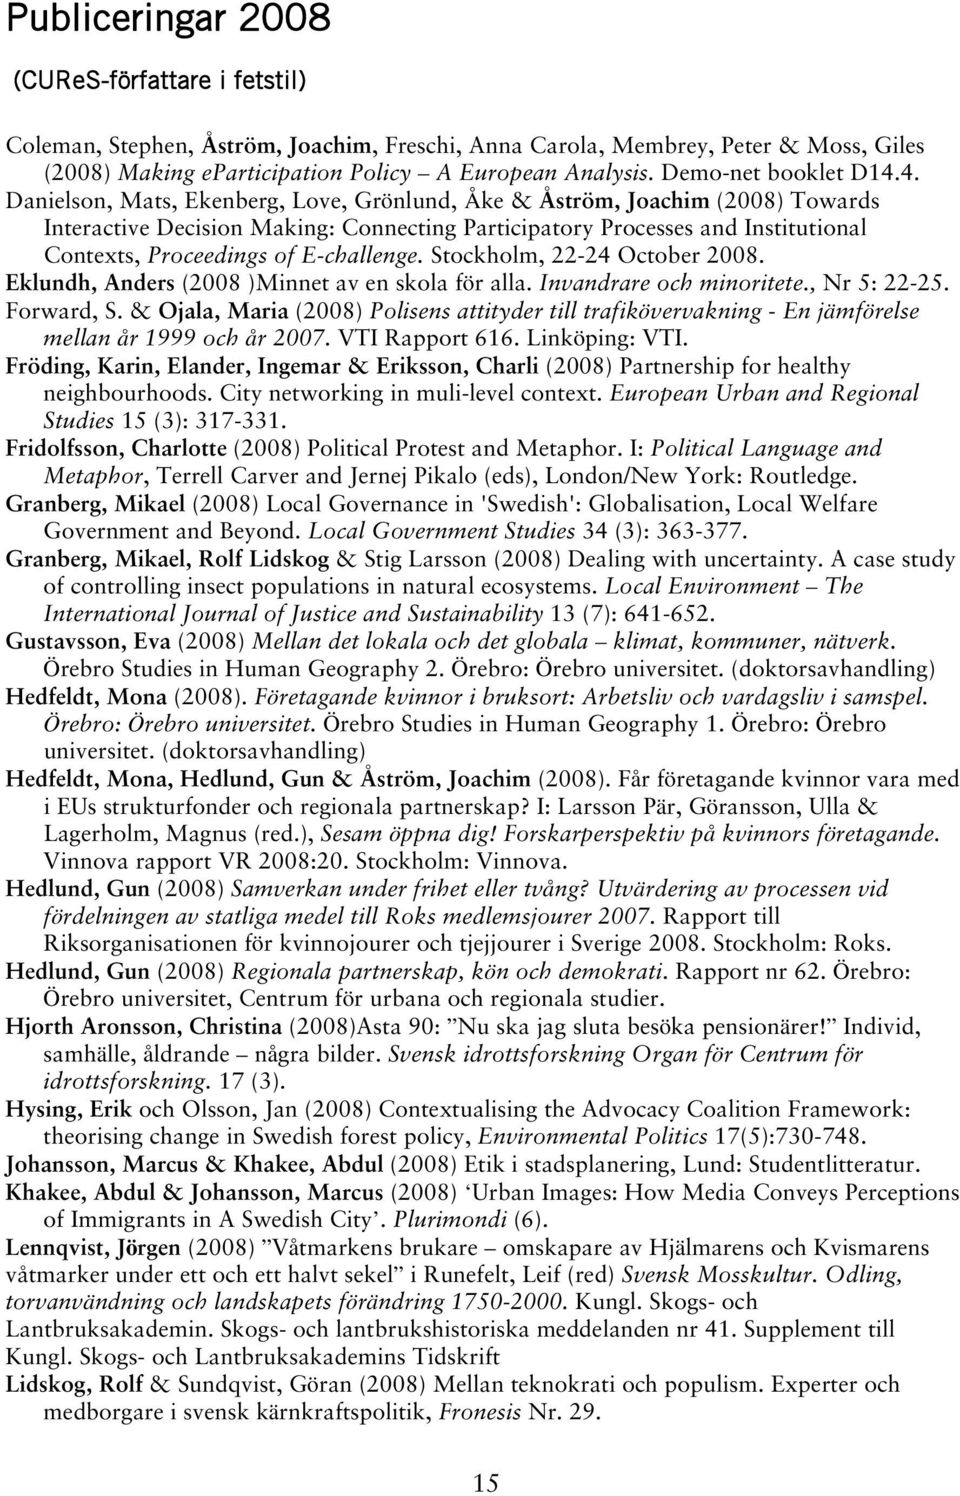 4. Danielson, Mats, Ekenberg, Love, Grönlund, Åke & Åström, Joachim (2008) Towards Interactive Decision Making: Connecting Participatory Processes and Institutional Contexts, Proceedings of